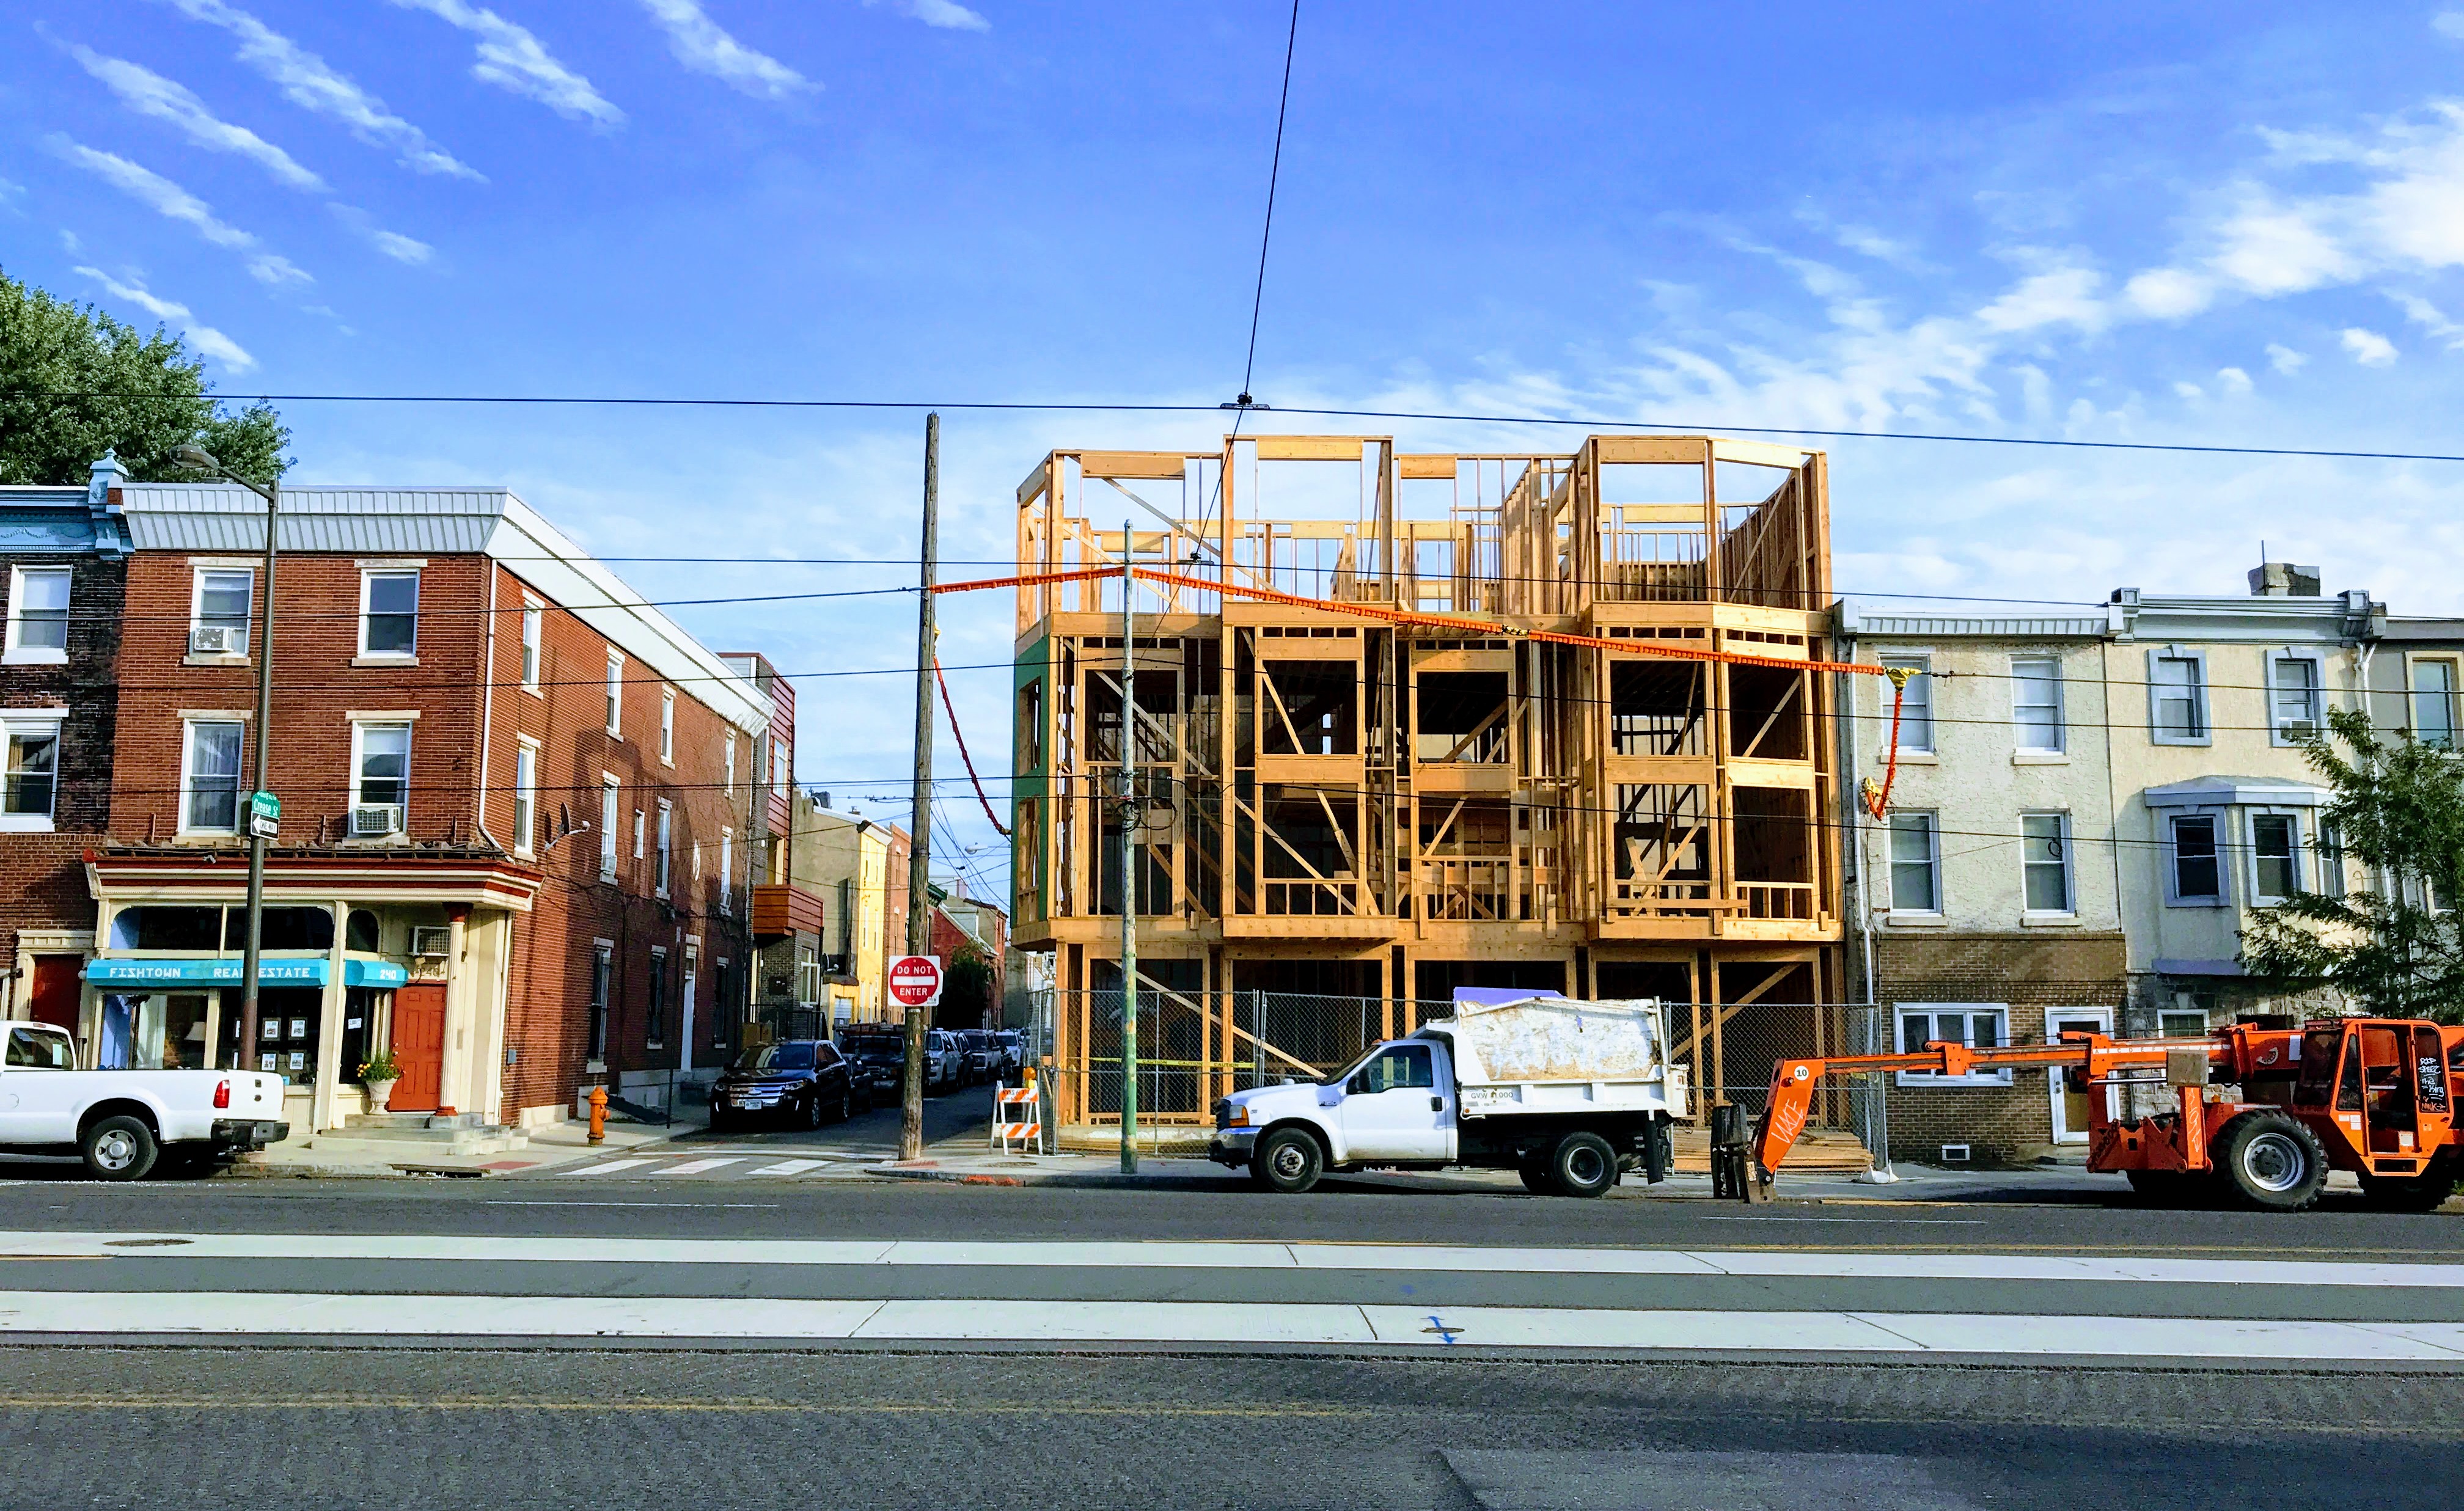 New construction underway on Girard Avenue in Fishtown.